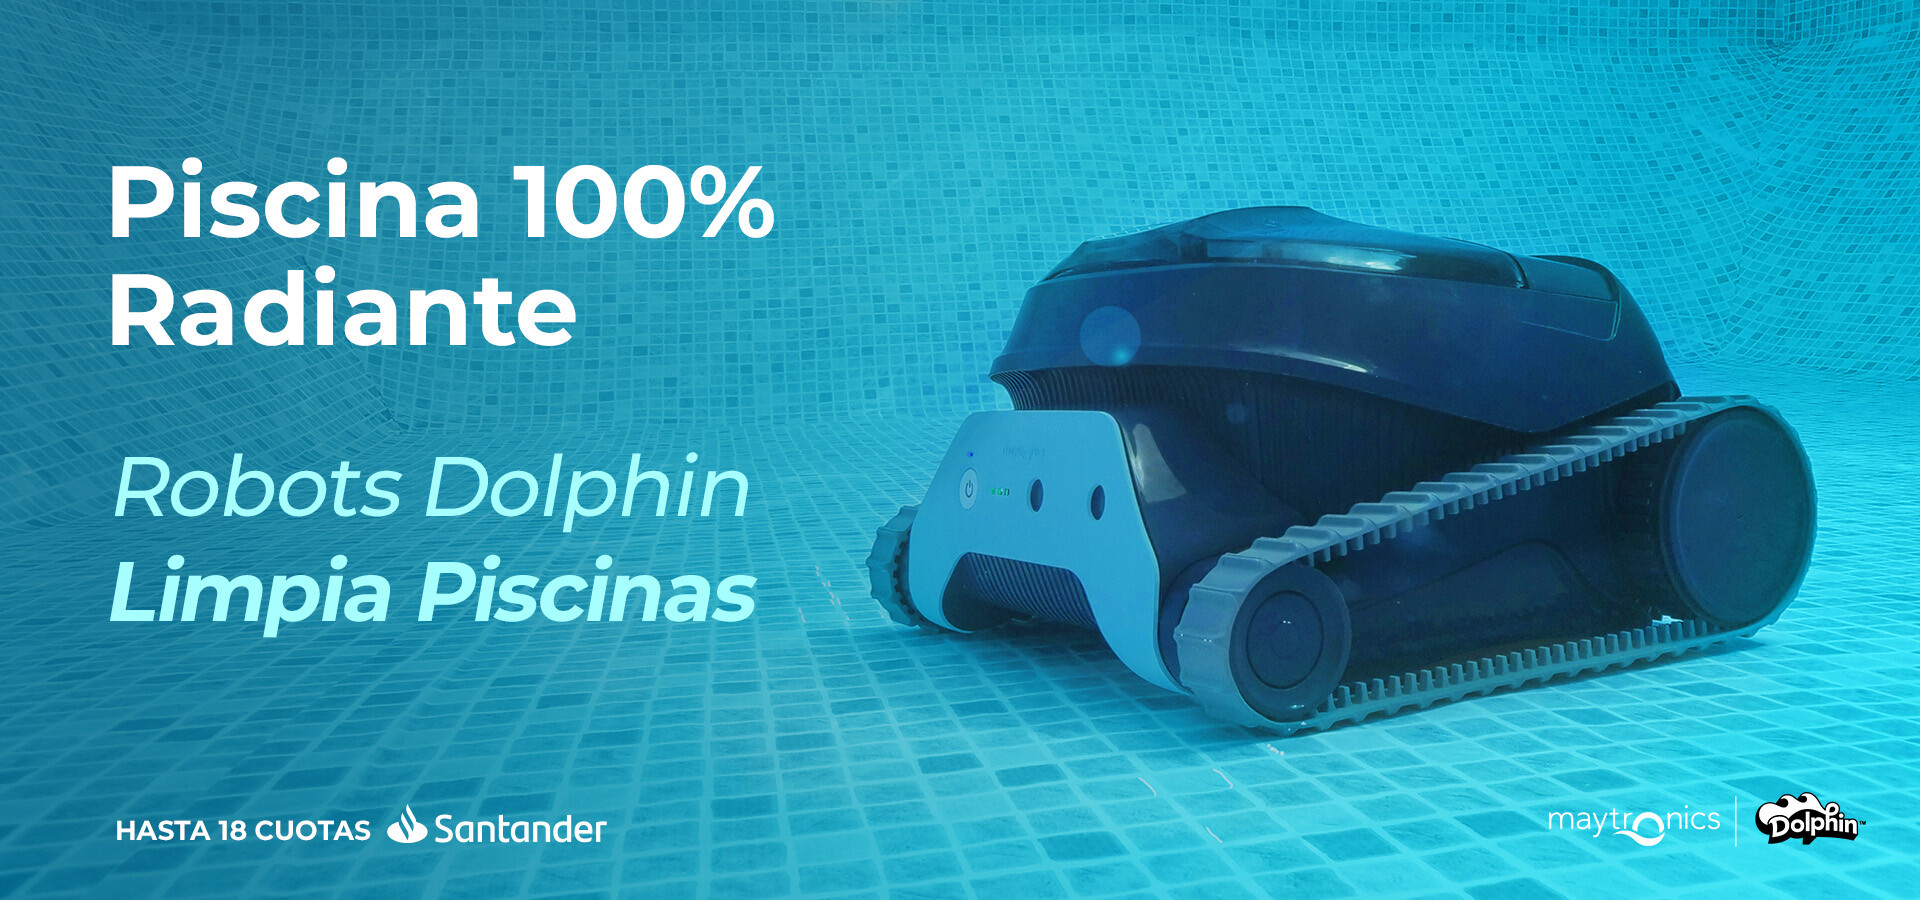 Robots Dolphin Limpia Piscinas